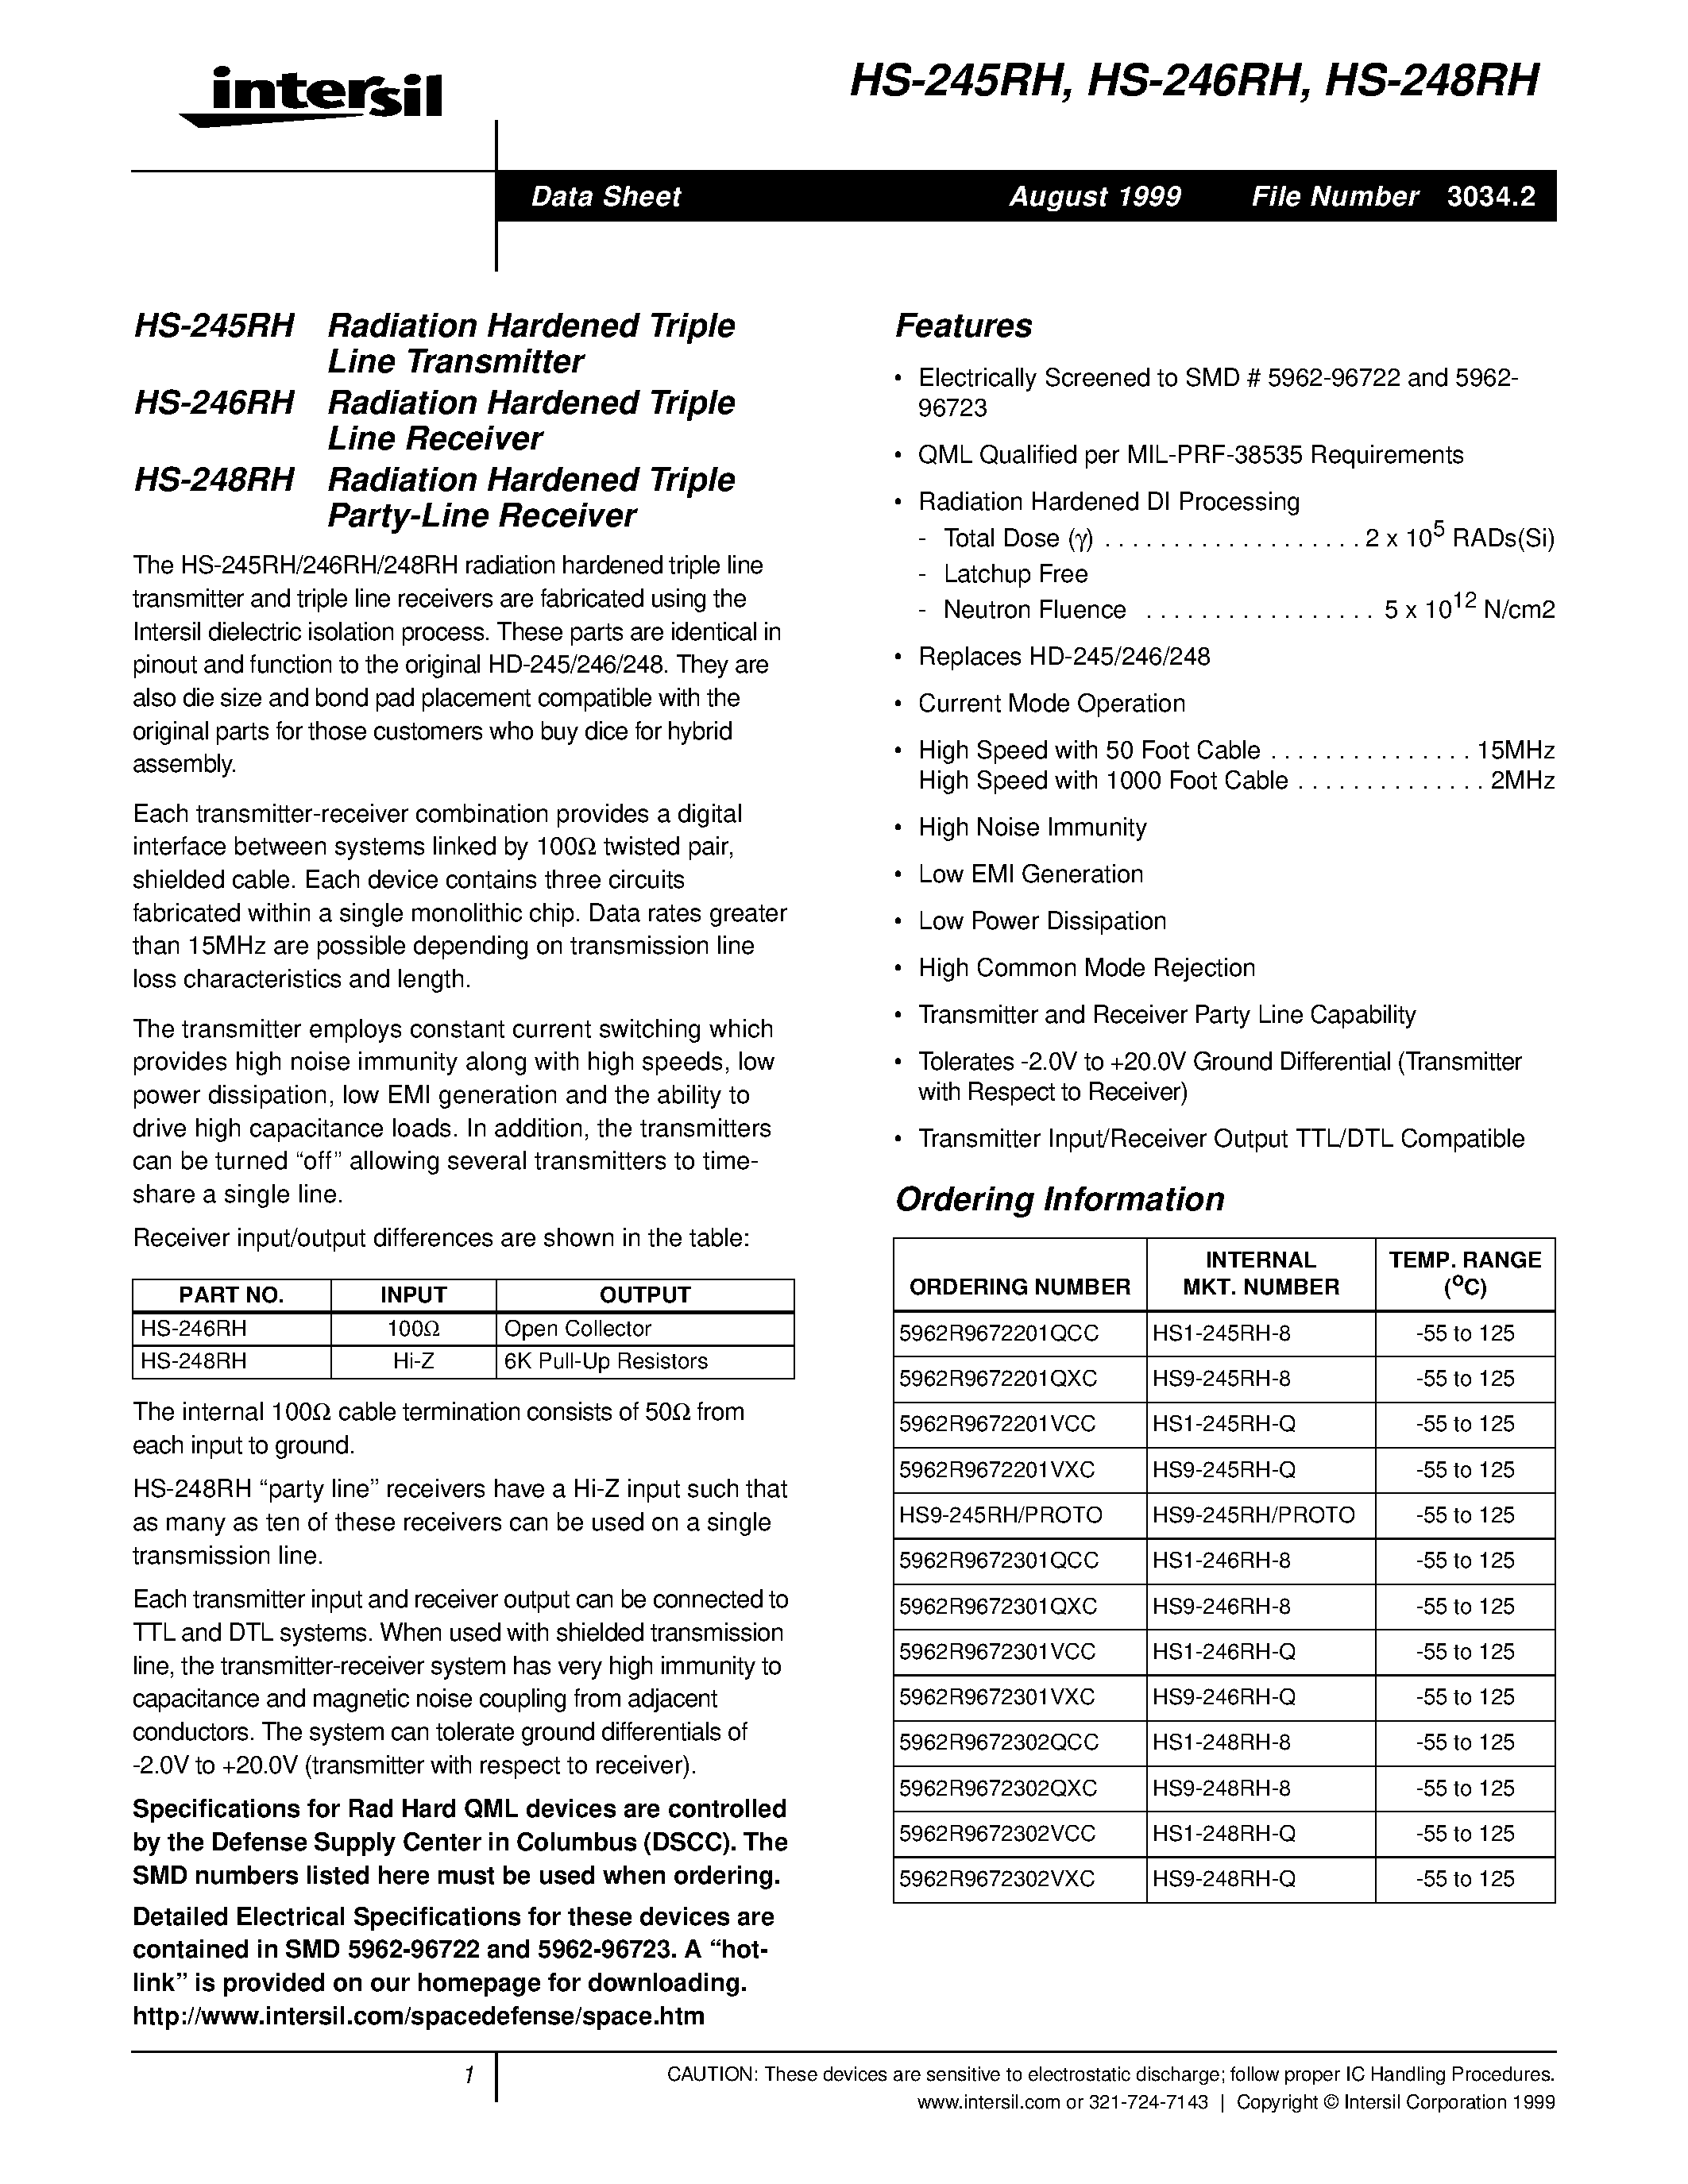 Datasheet HS9-248RH-Q - Radiation Hardened Triple Line(party-Line) Transmitter page 1